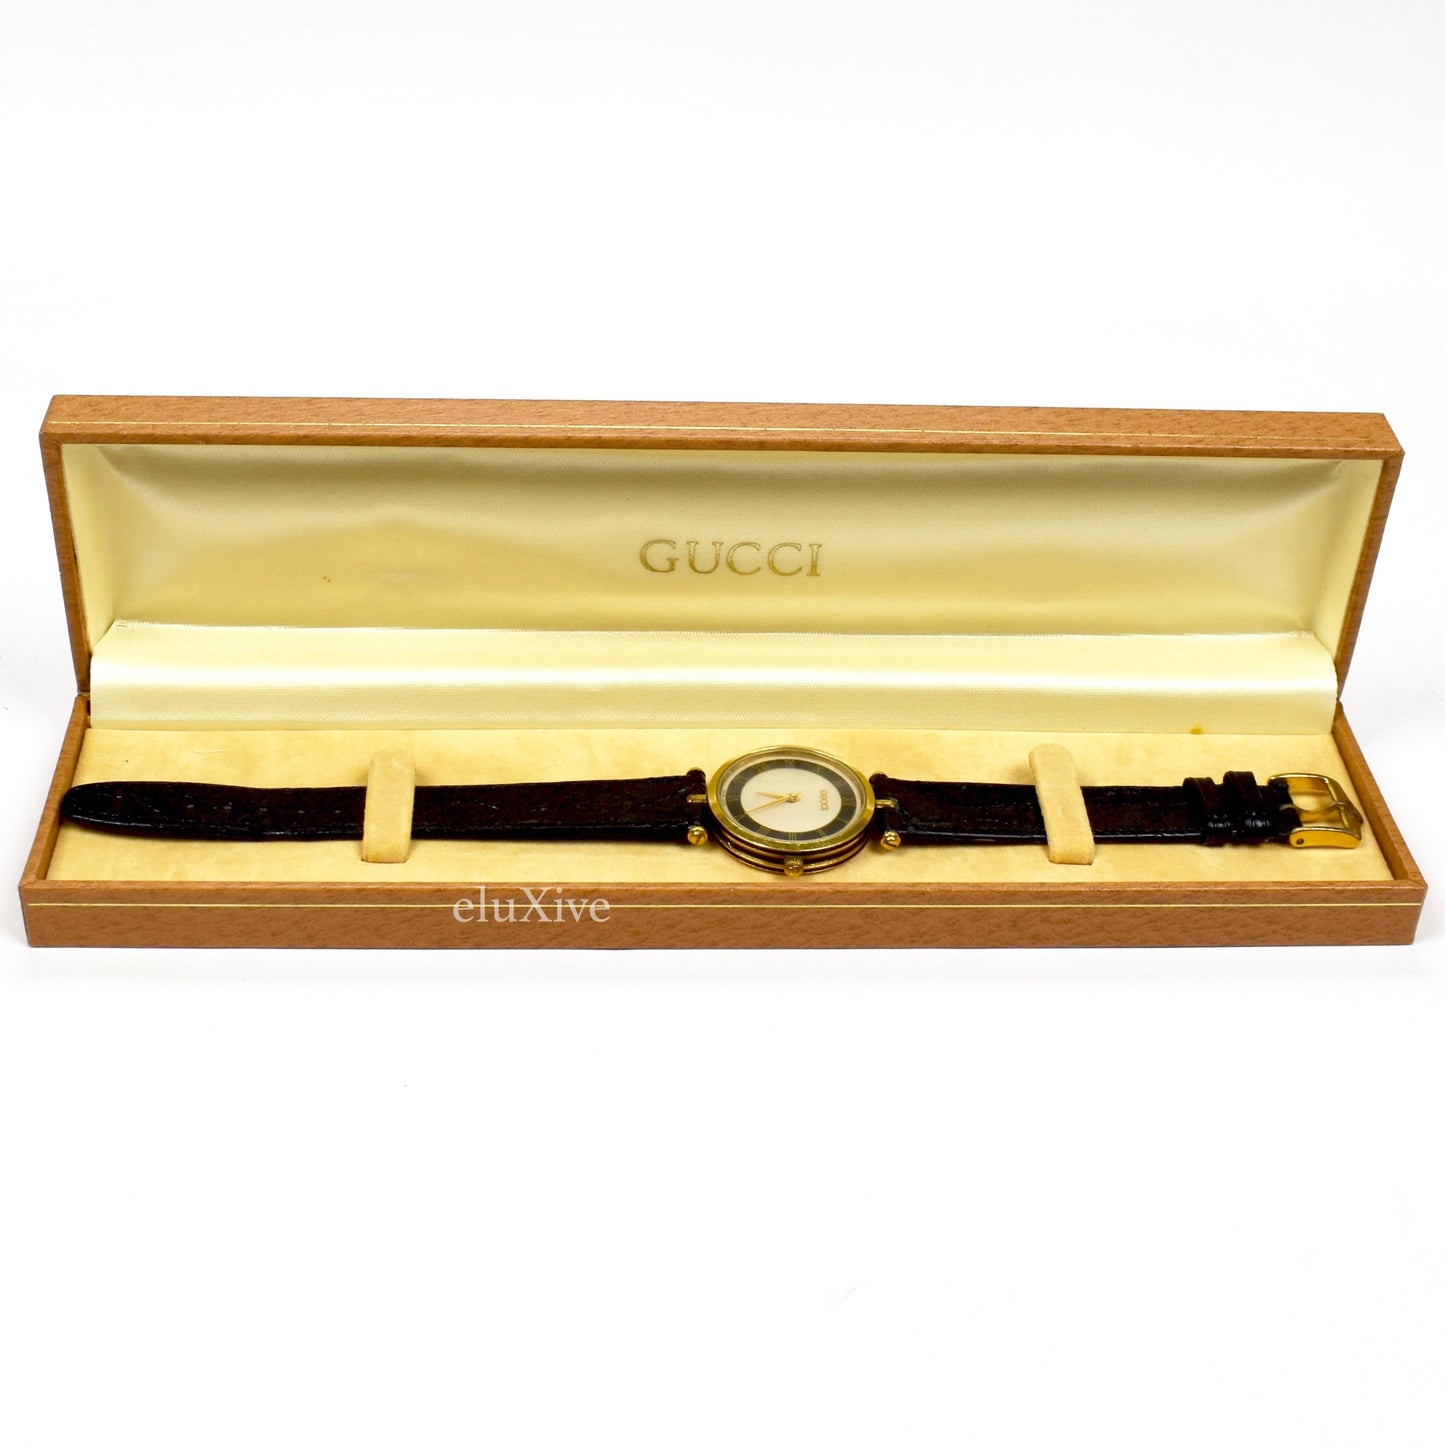 Gucci - Men's 2000M 2-Tone Dial Watch